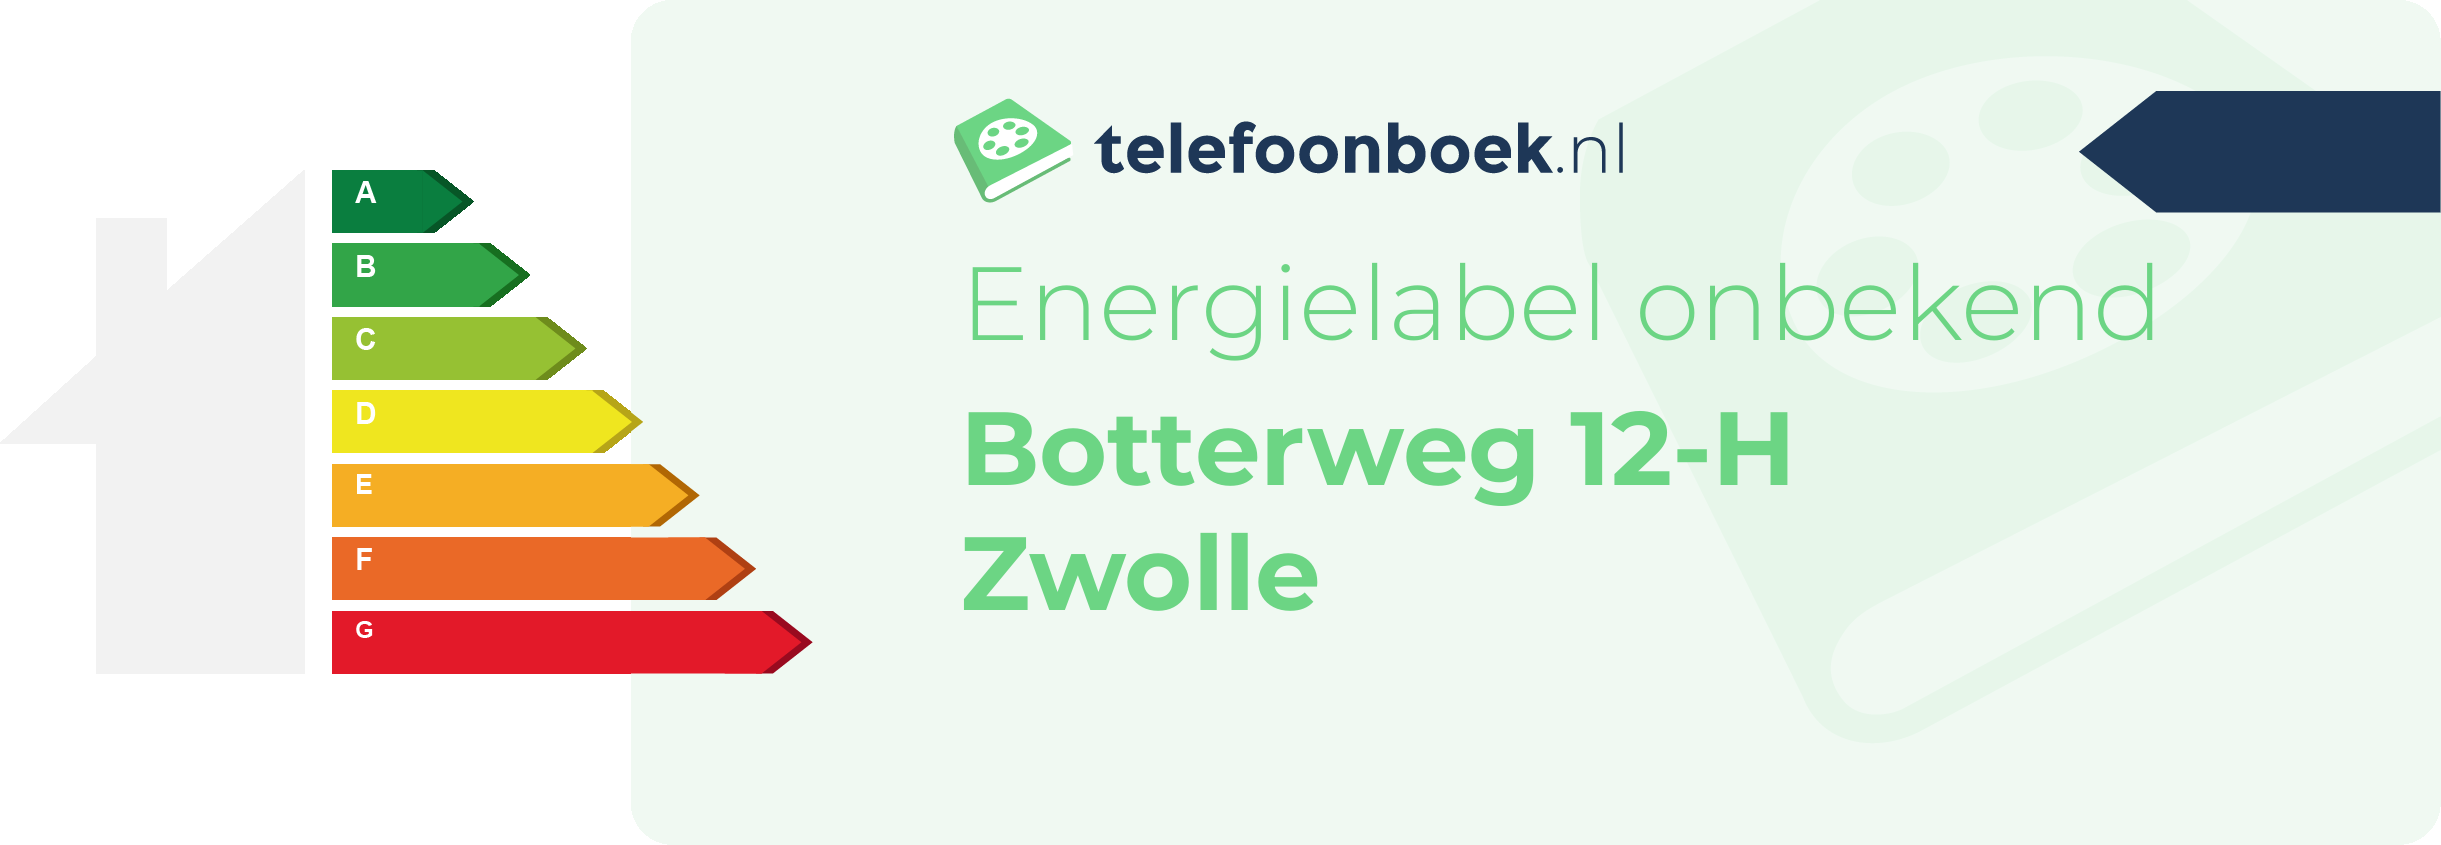 Energielabel Botterweg 12-H Zwolle